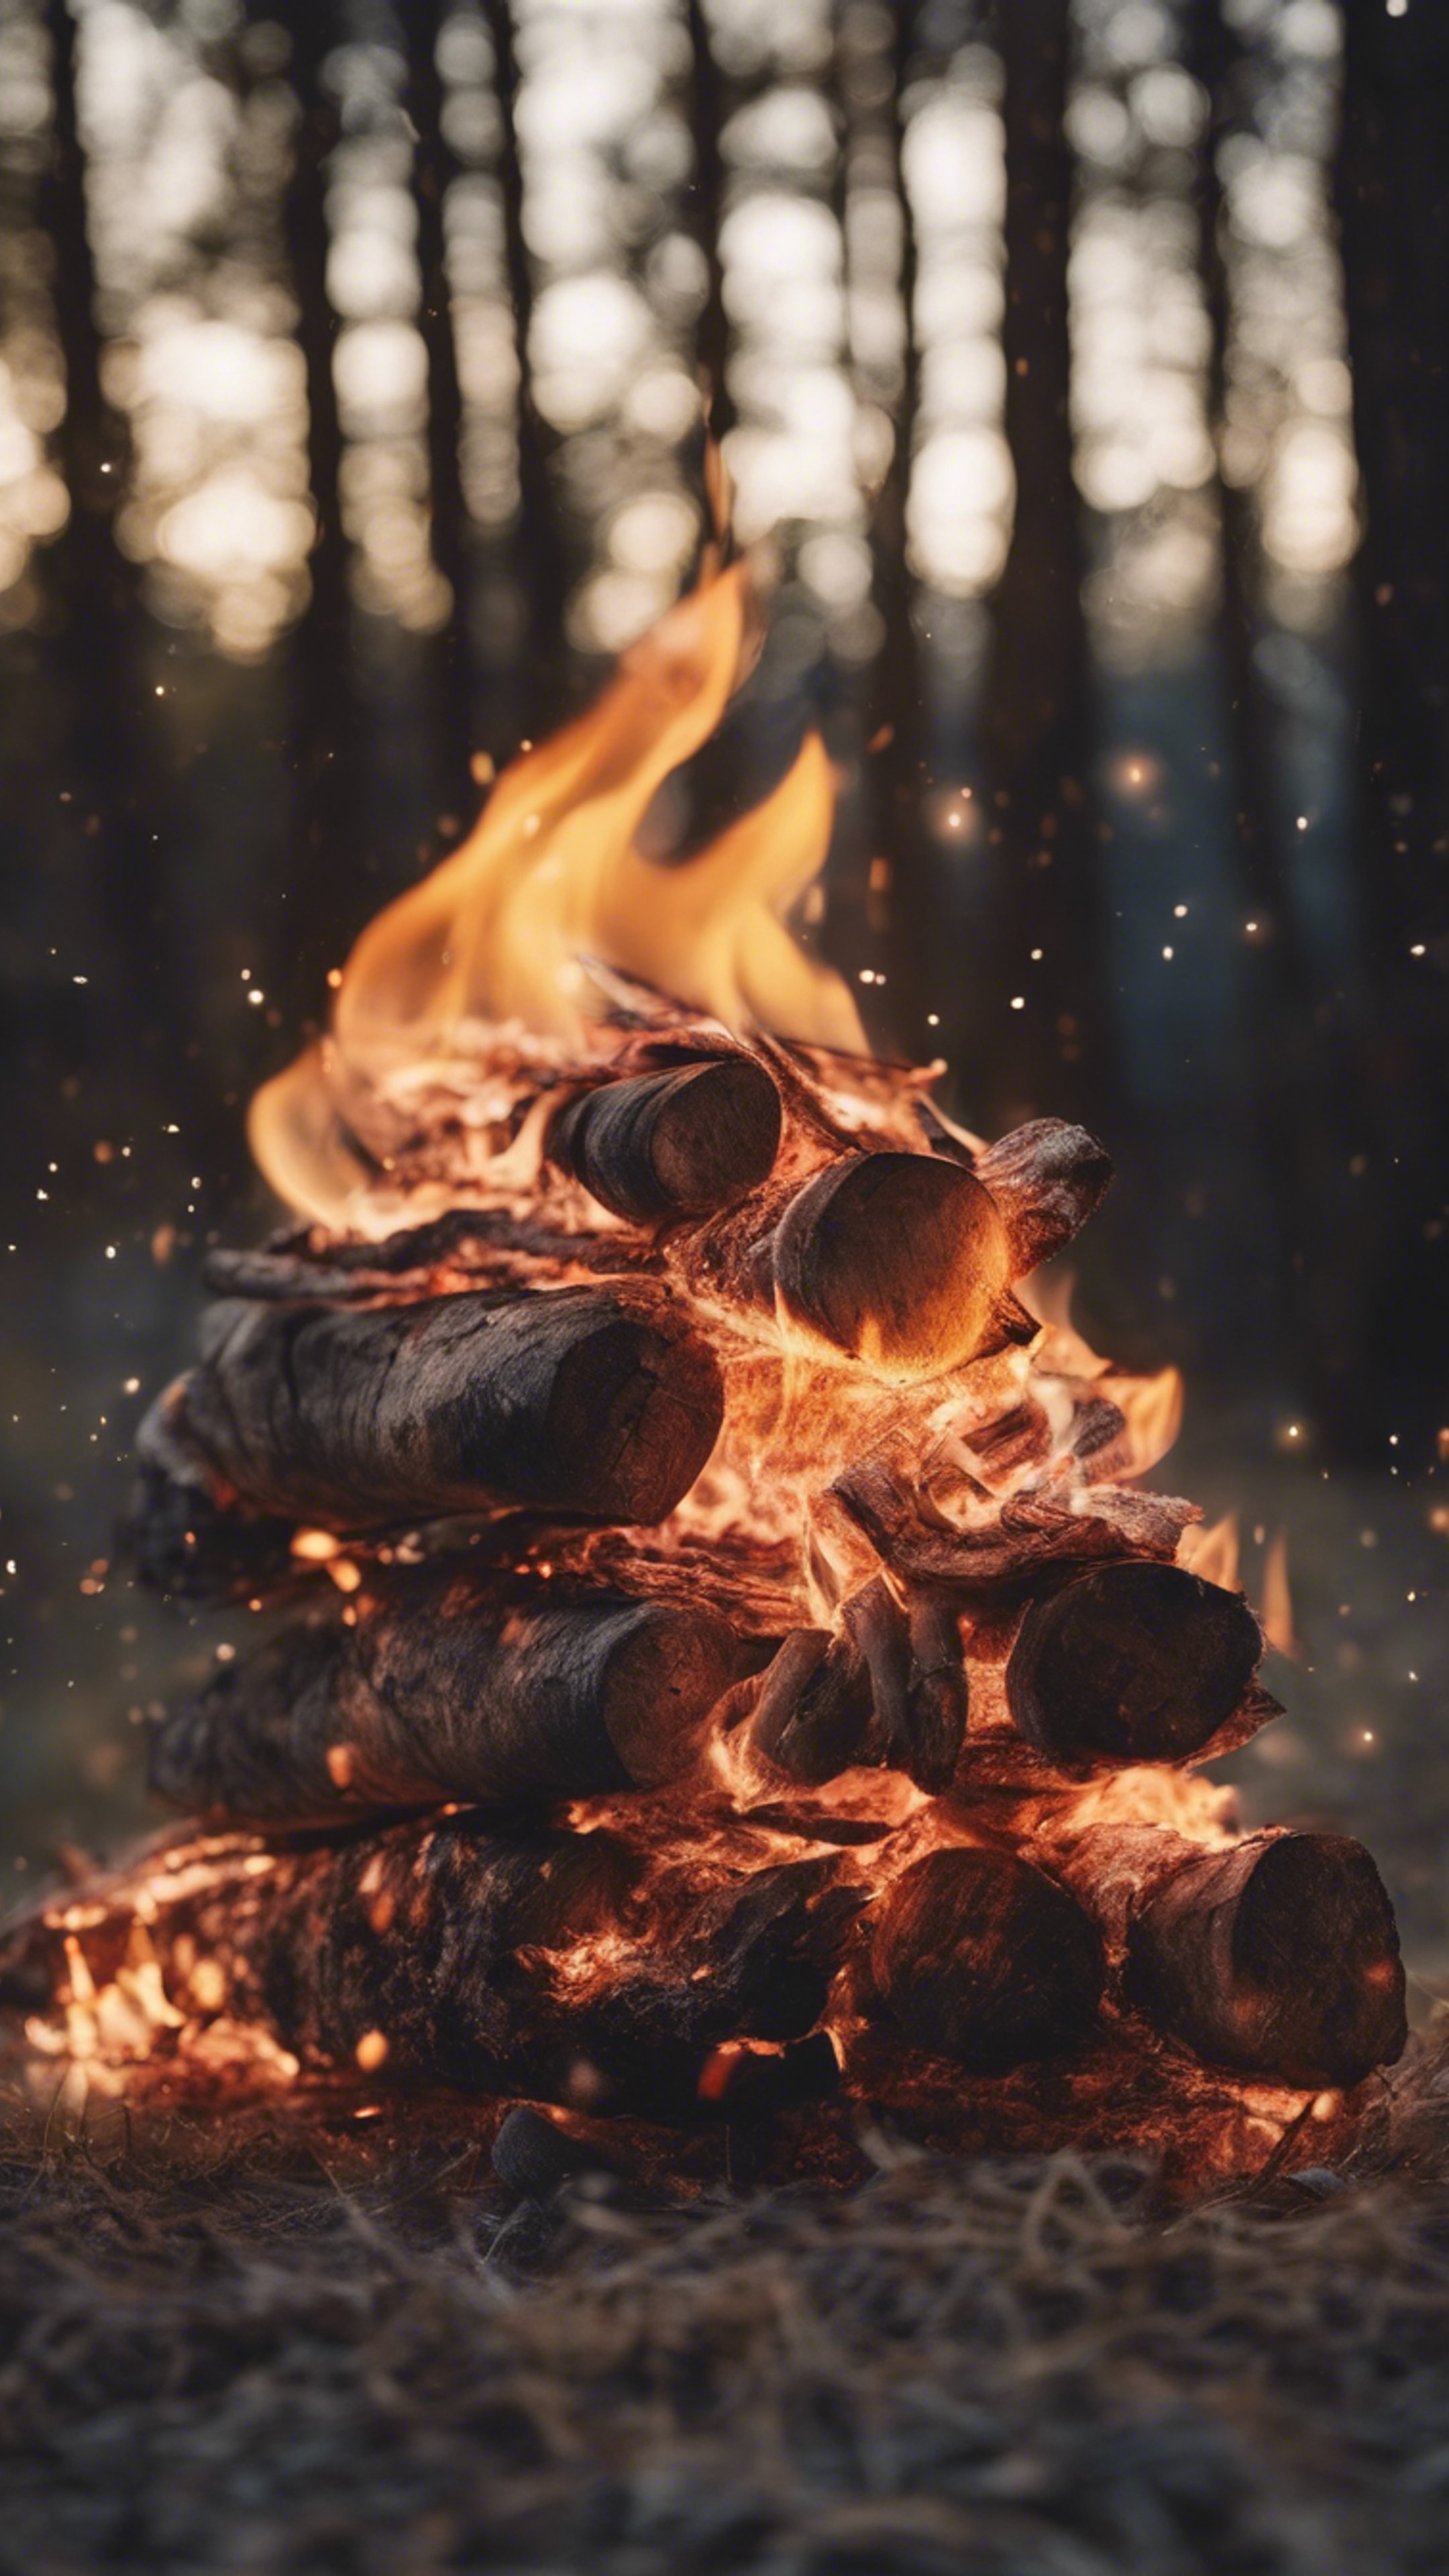 An enchanting bonfire, where the flames dance to form the Libra constellation.壁紙[9d8c8ec7f5494017bdee]